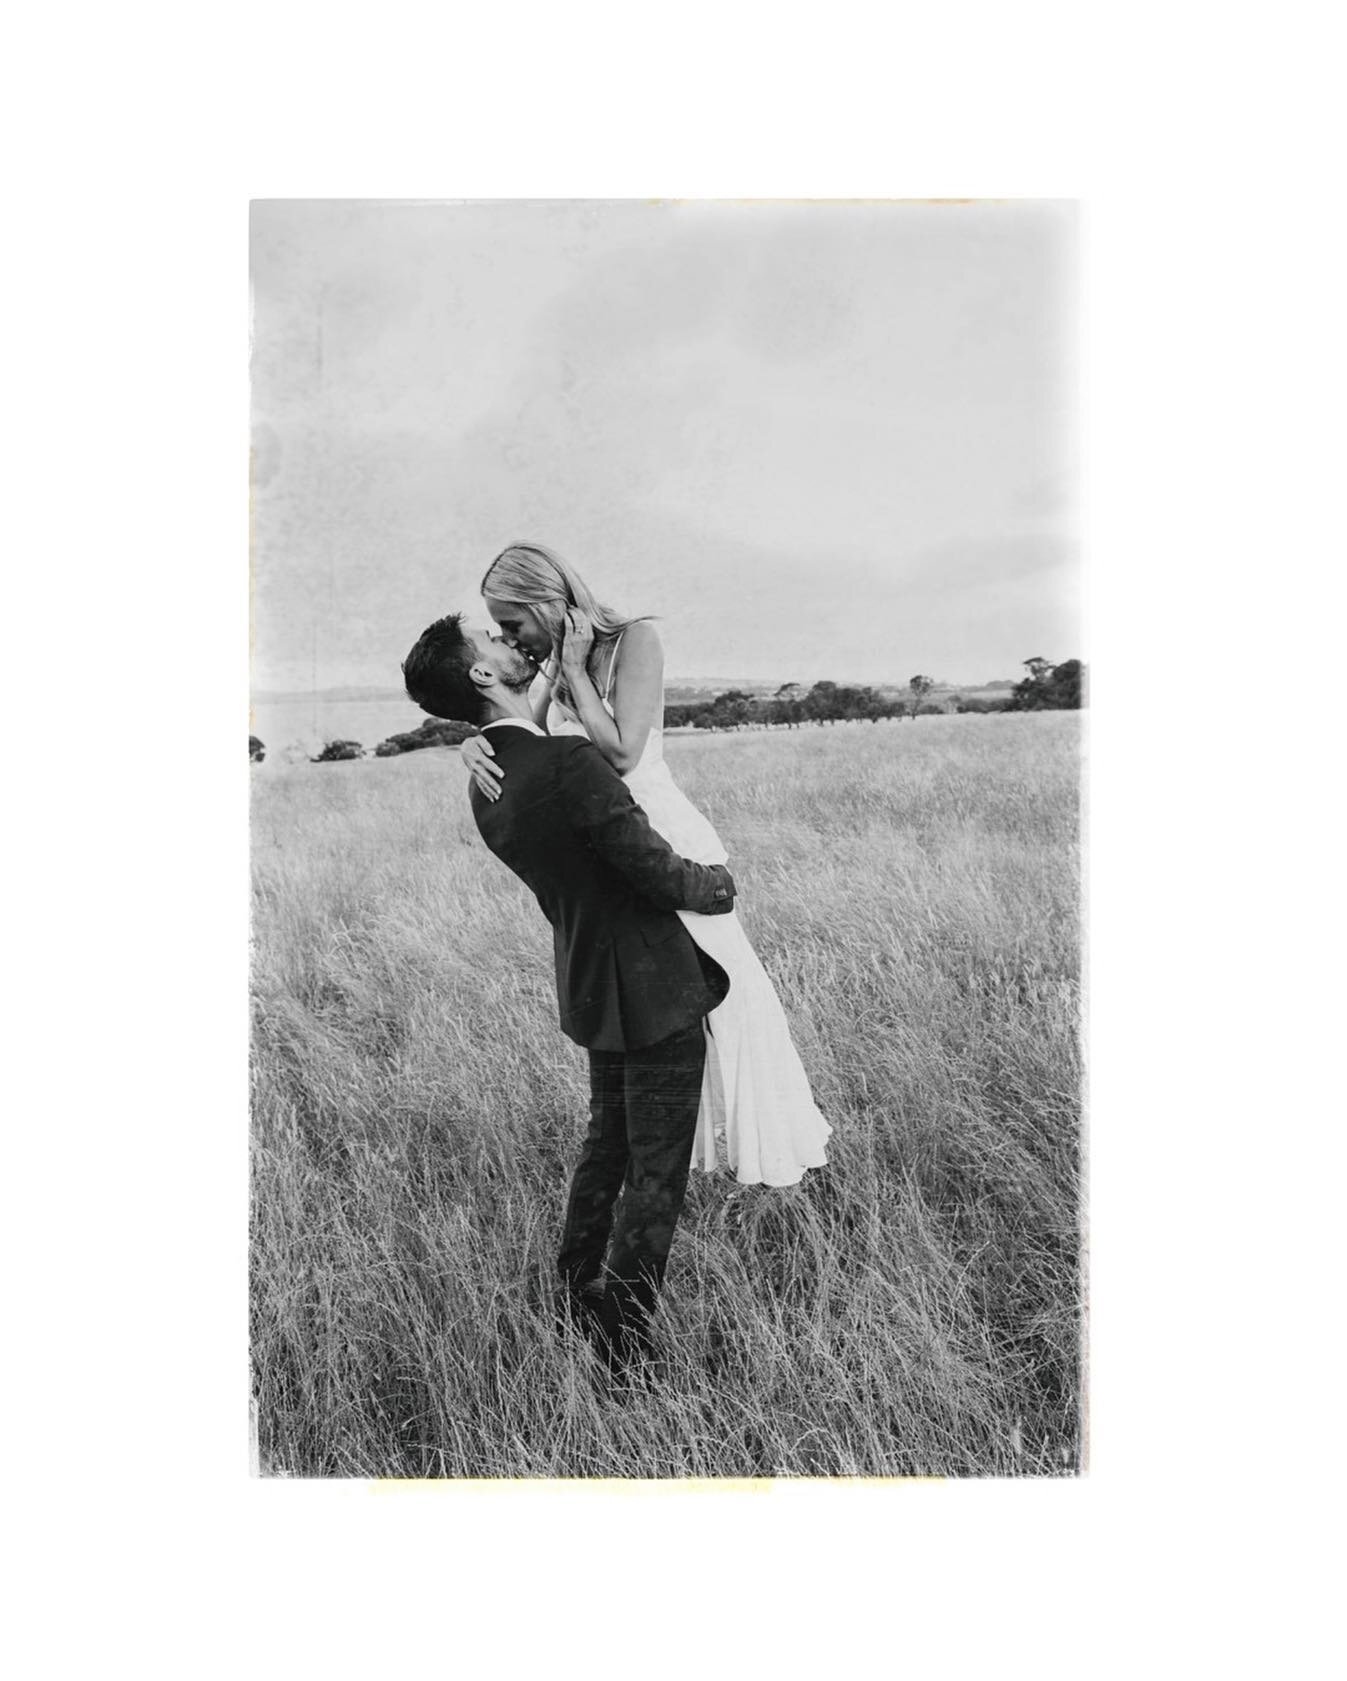 A romantic moment from Josh and Katie&rsquo;s Phillip Island Wedding&hellip;
.
.
.
.
.
.

#macedonrangesweddingphotographer
#warrnamboolweddingphotographer
#australianelopement
#elopementphotography
#australianweddingphotographer
#australianwedding
#